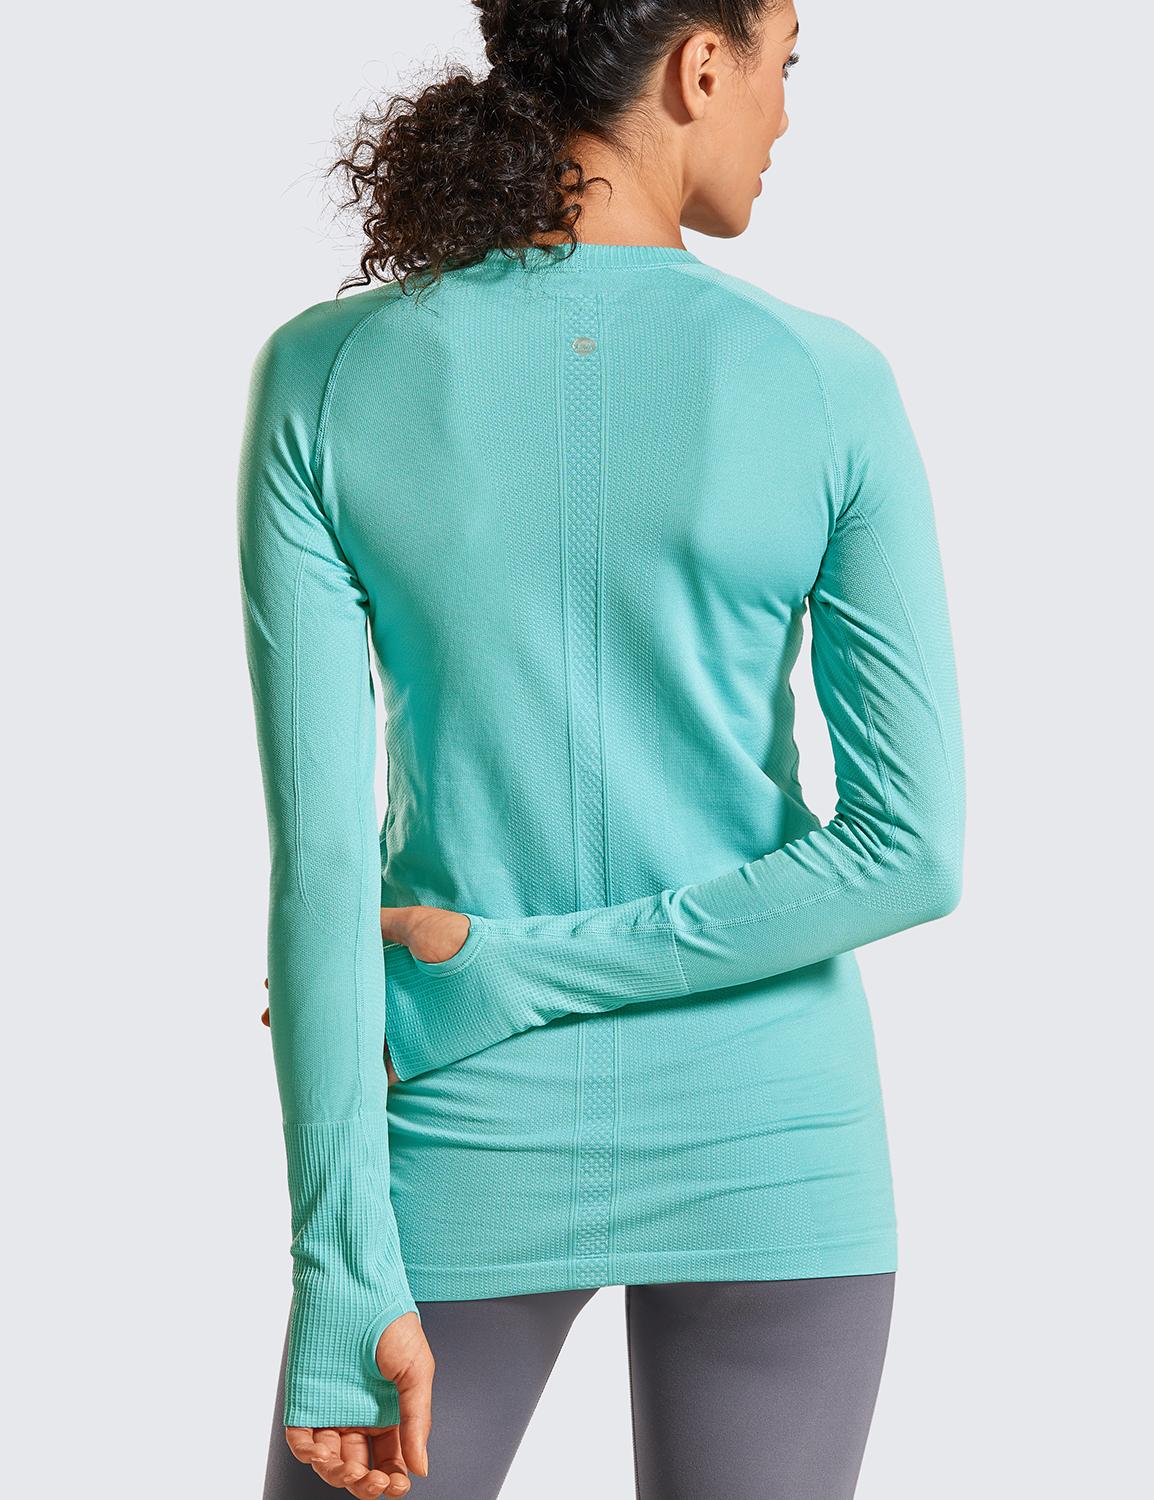 Buy MathCat Seamless Workout Shirts for Women Long Sleeve